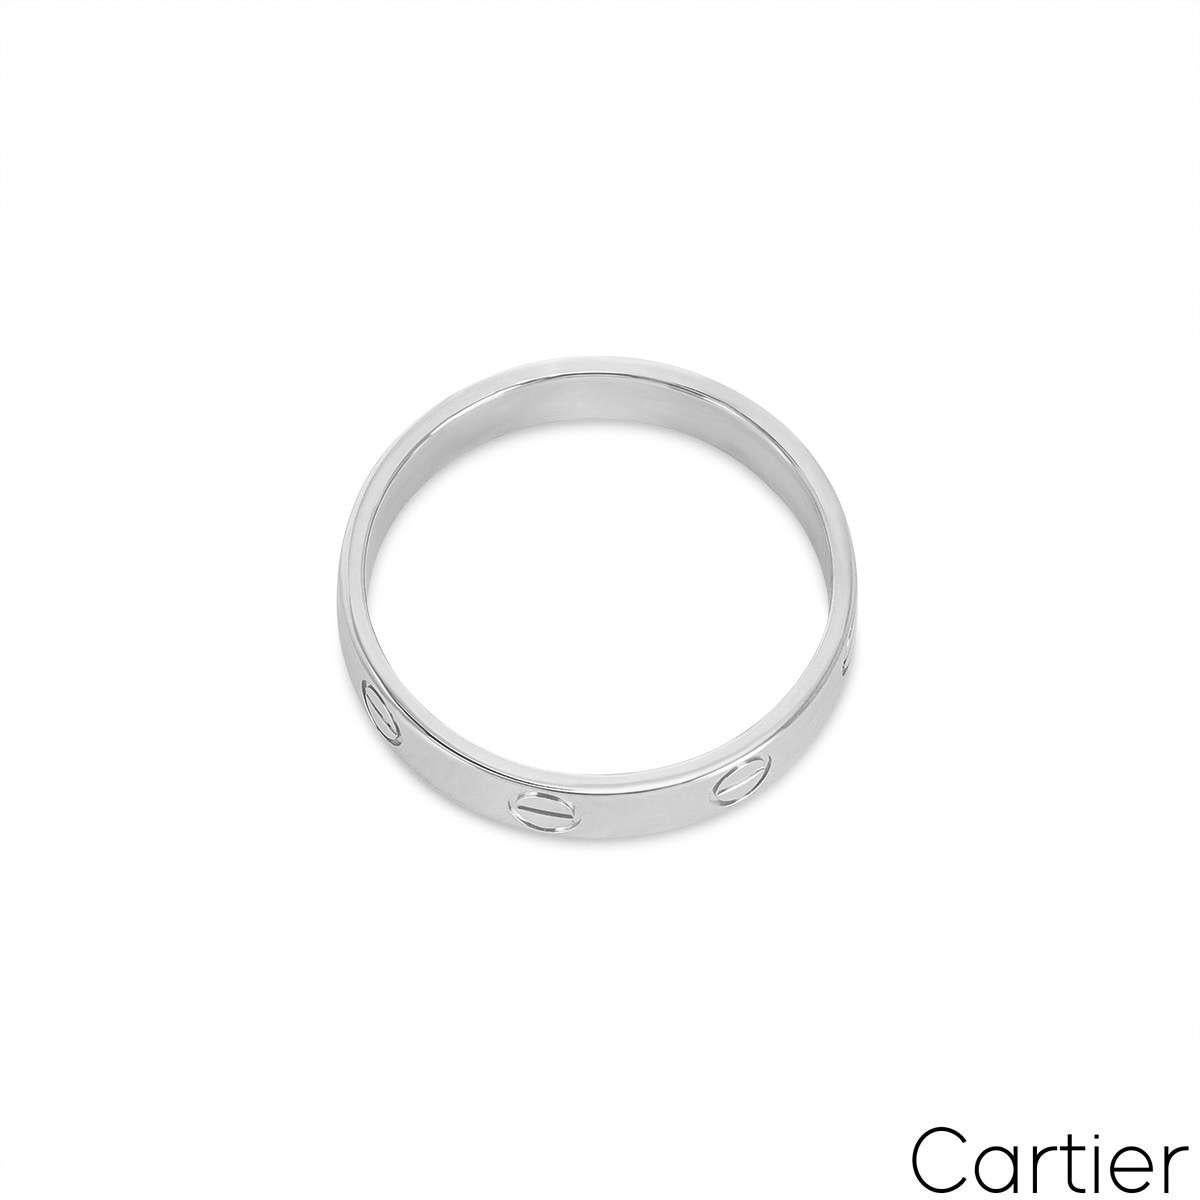  Cartier Alliance Plain Love taille 51 B4085100 Unisexe 